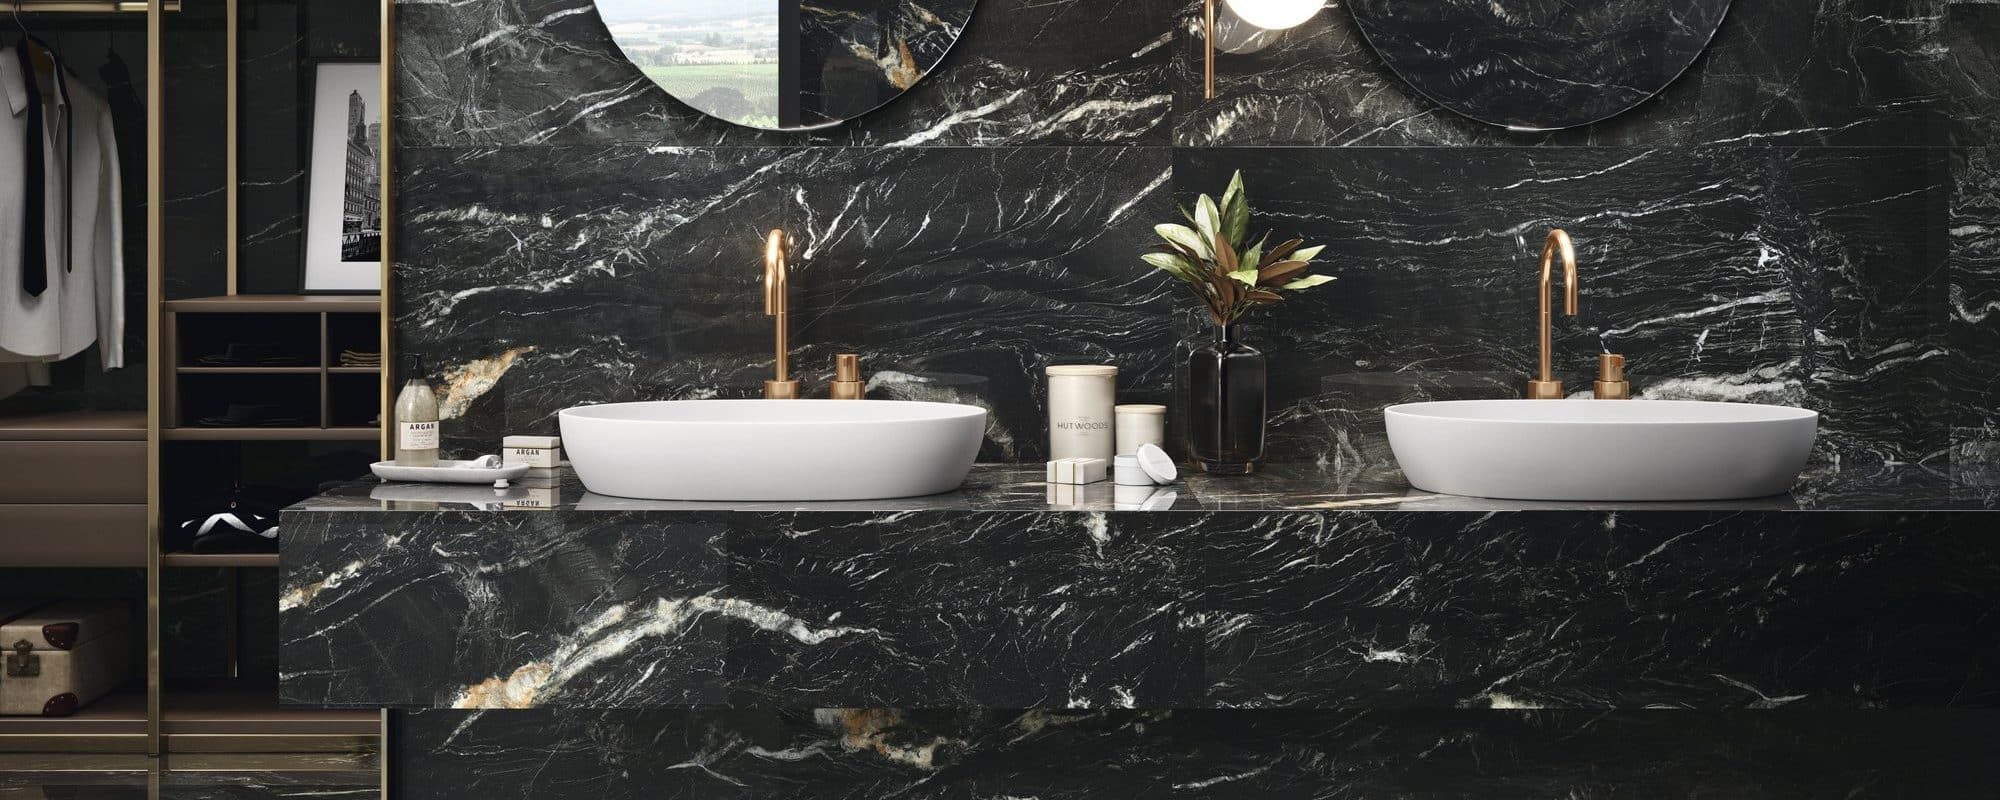 saint-marble effect bathroom tiles uk slider 1